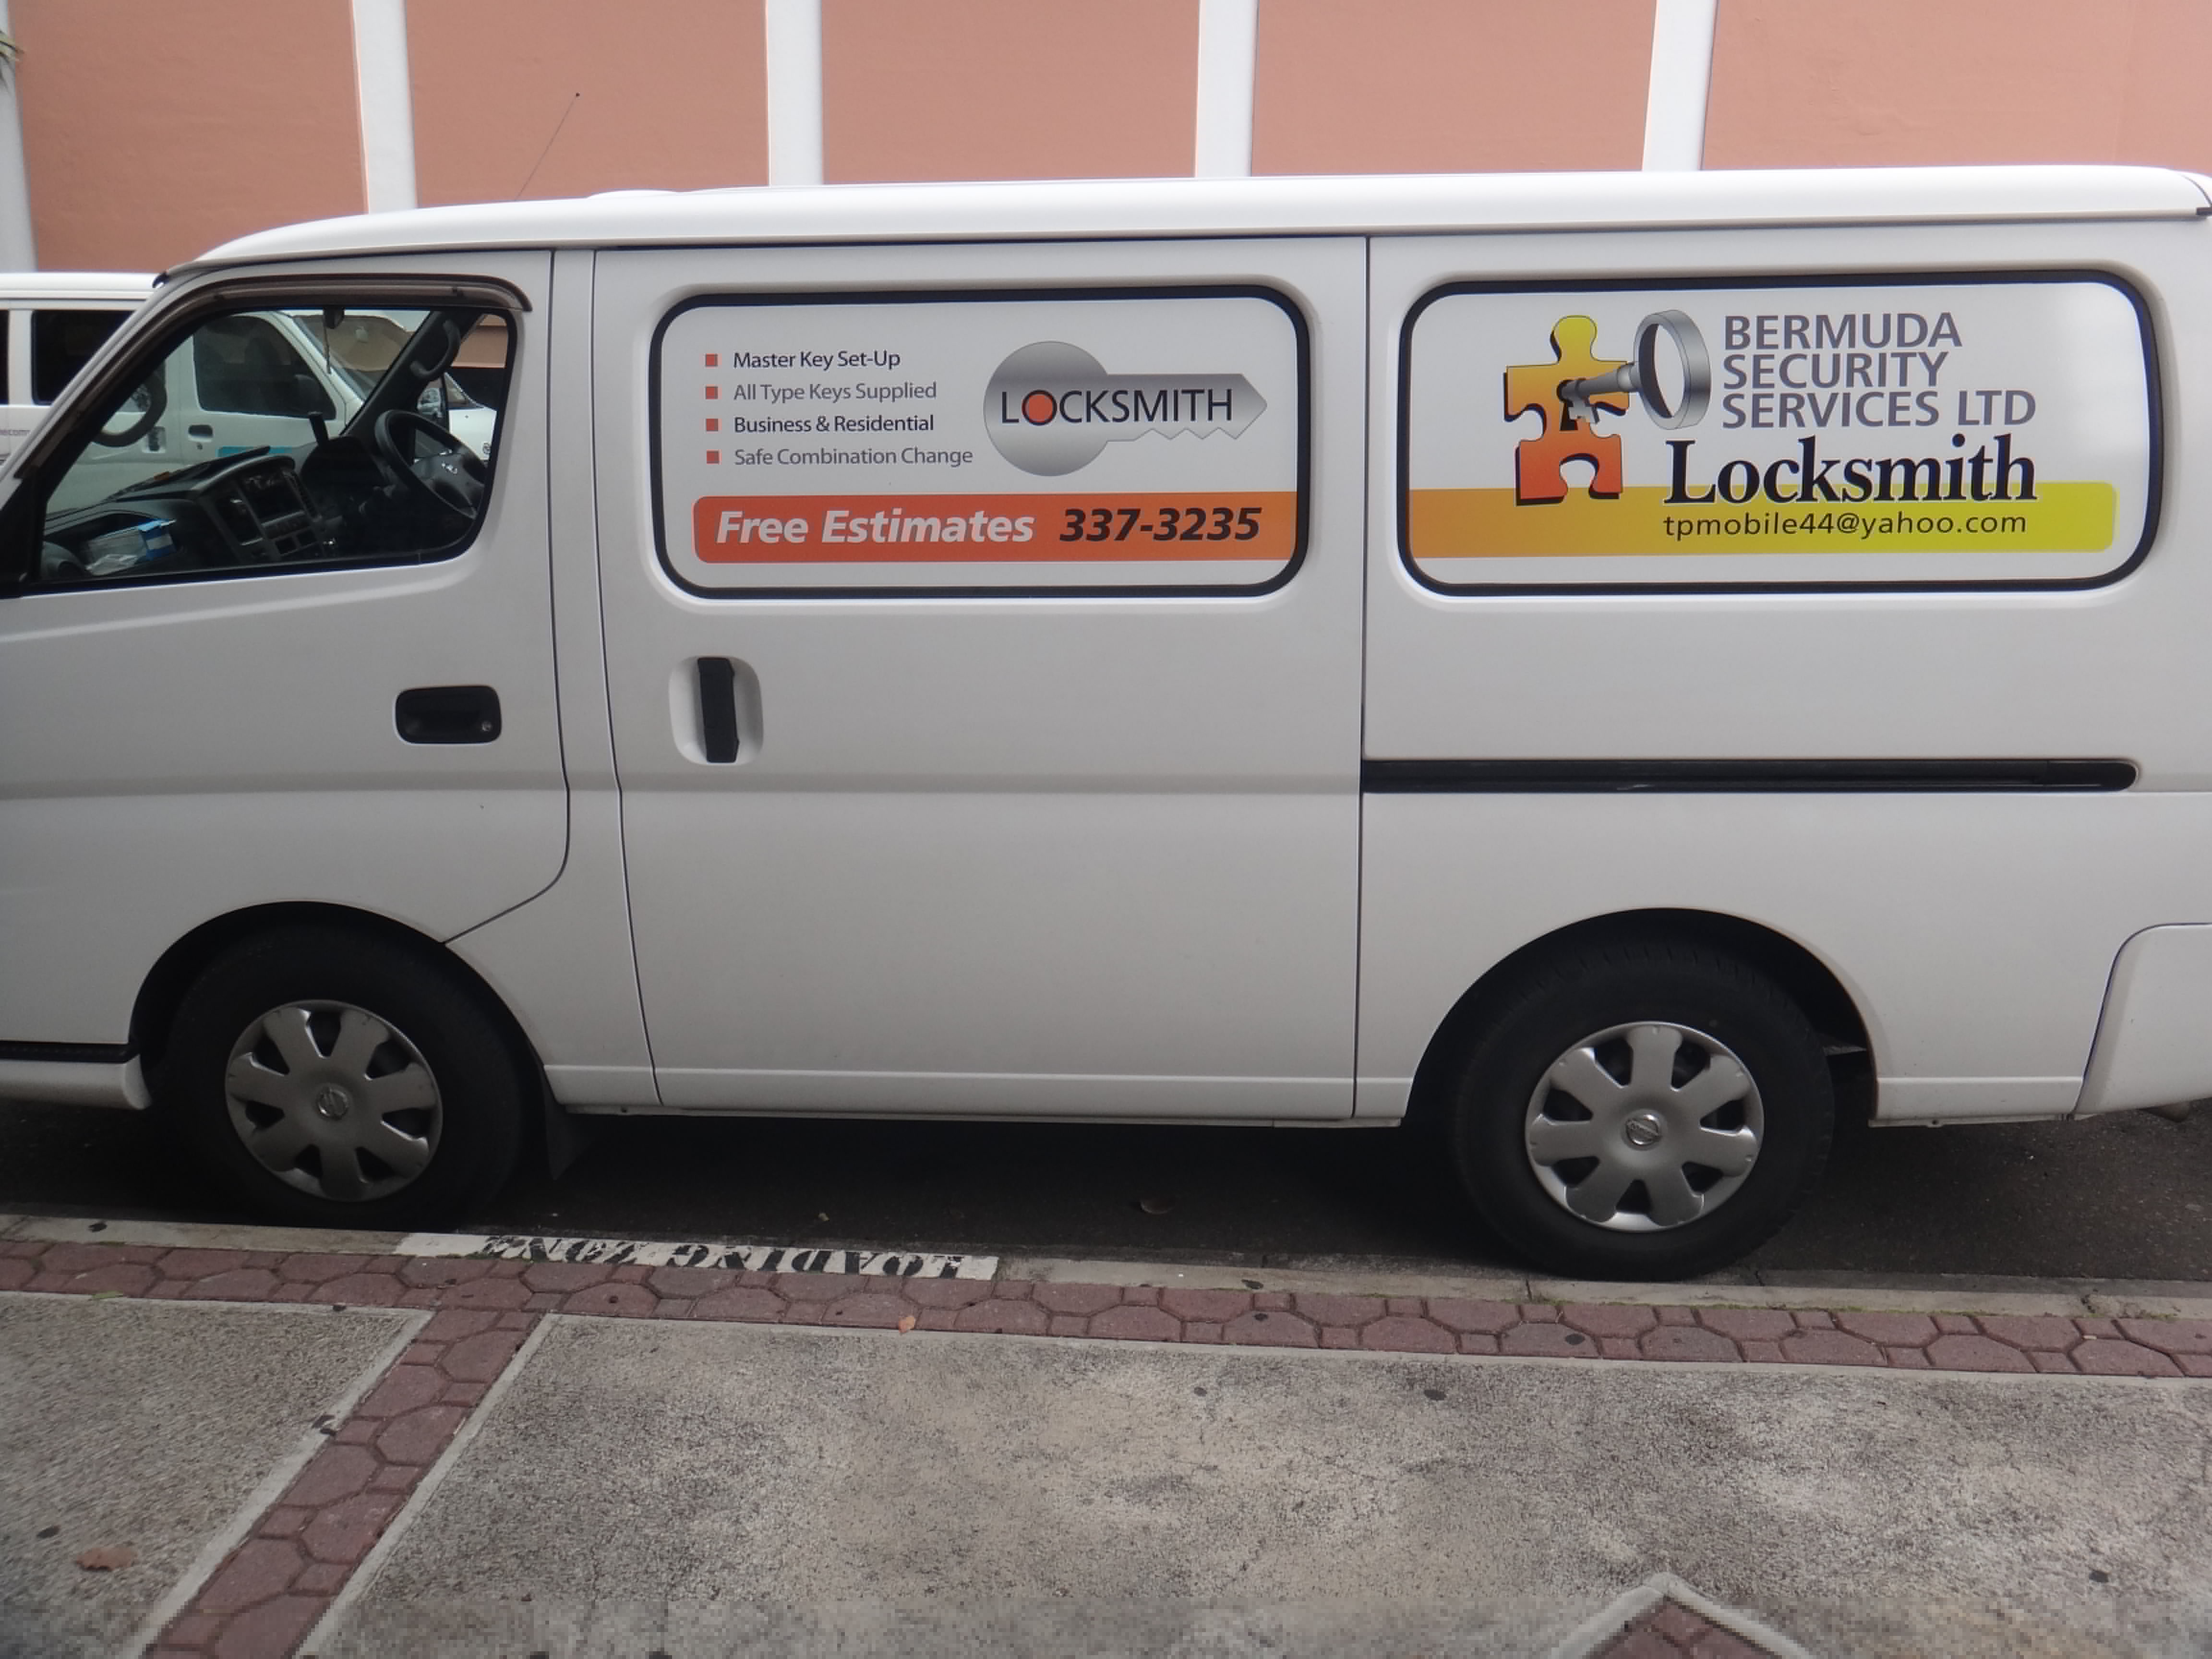 Bermuda Security Services Ltd. (Locksmiths)